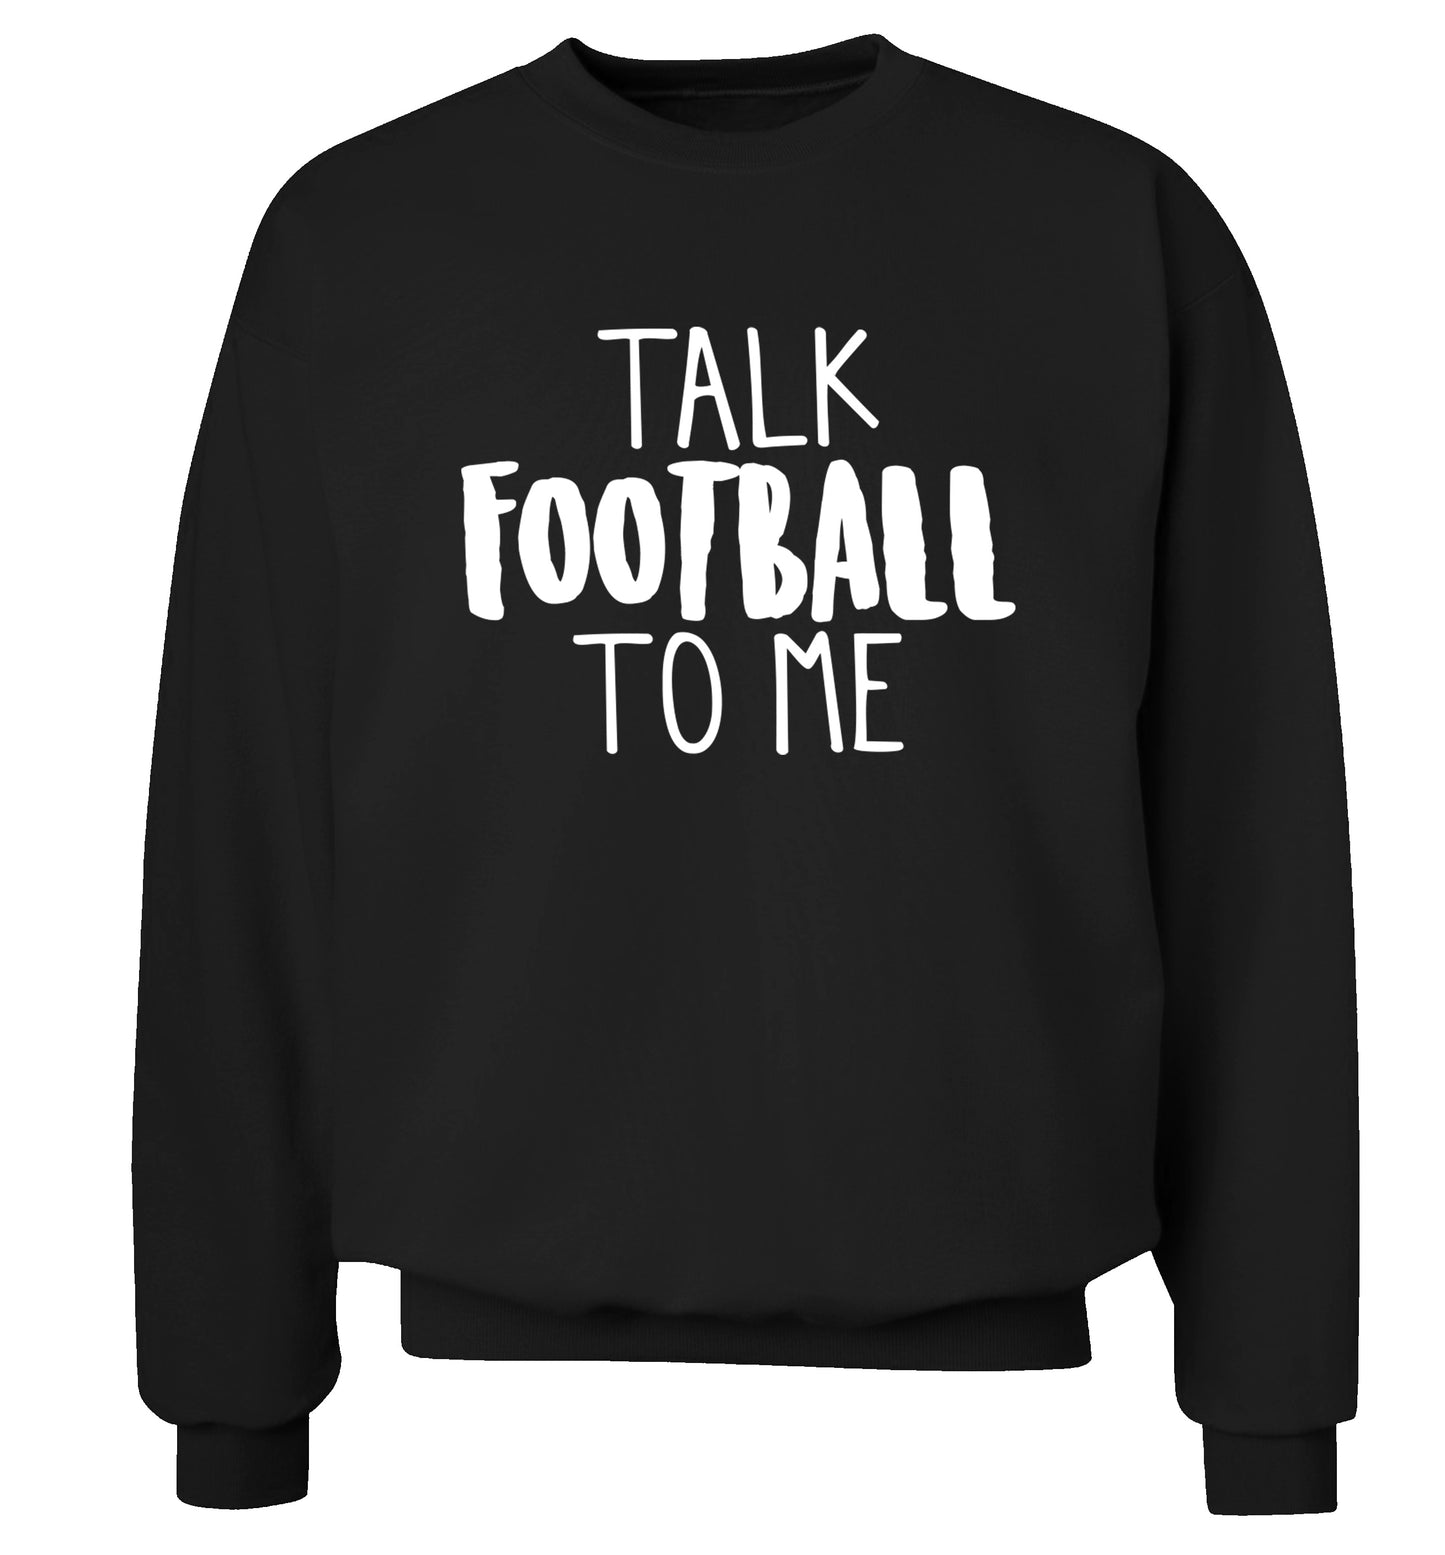 Talk football to me Adult's unisexblack Sweater 2XL